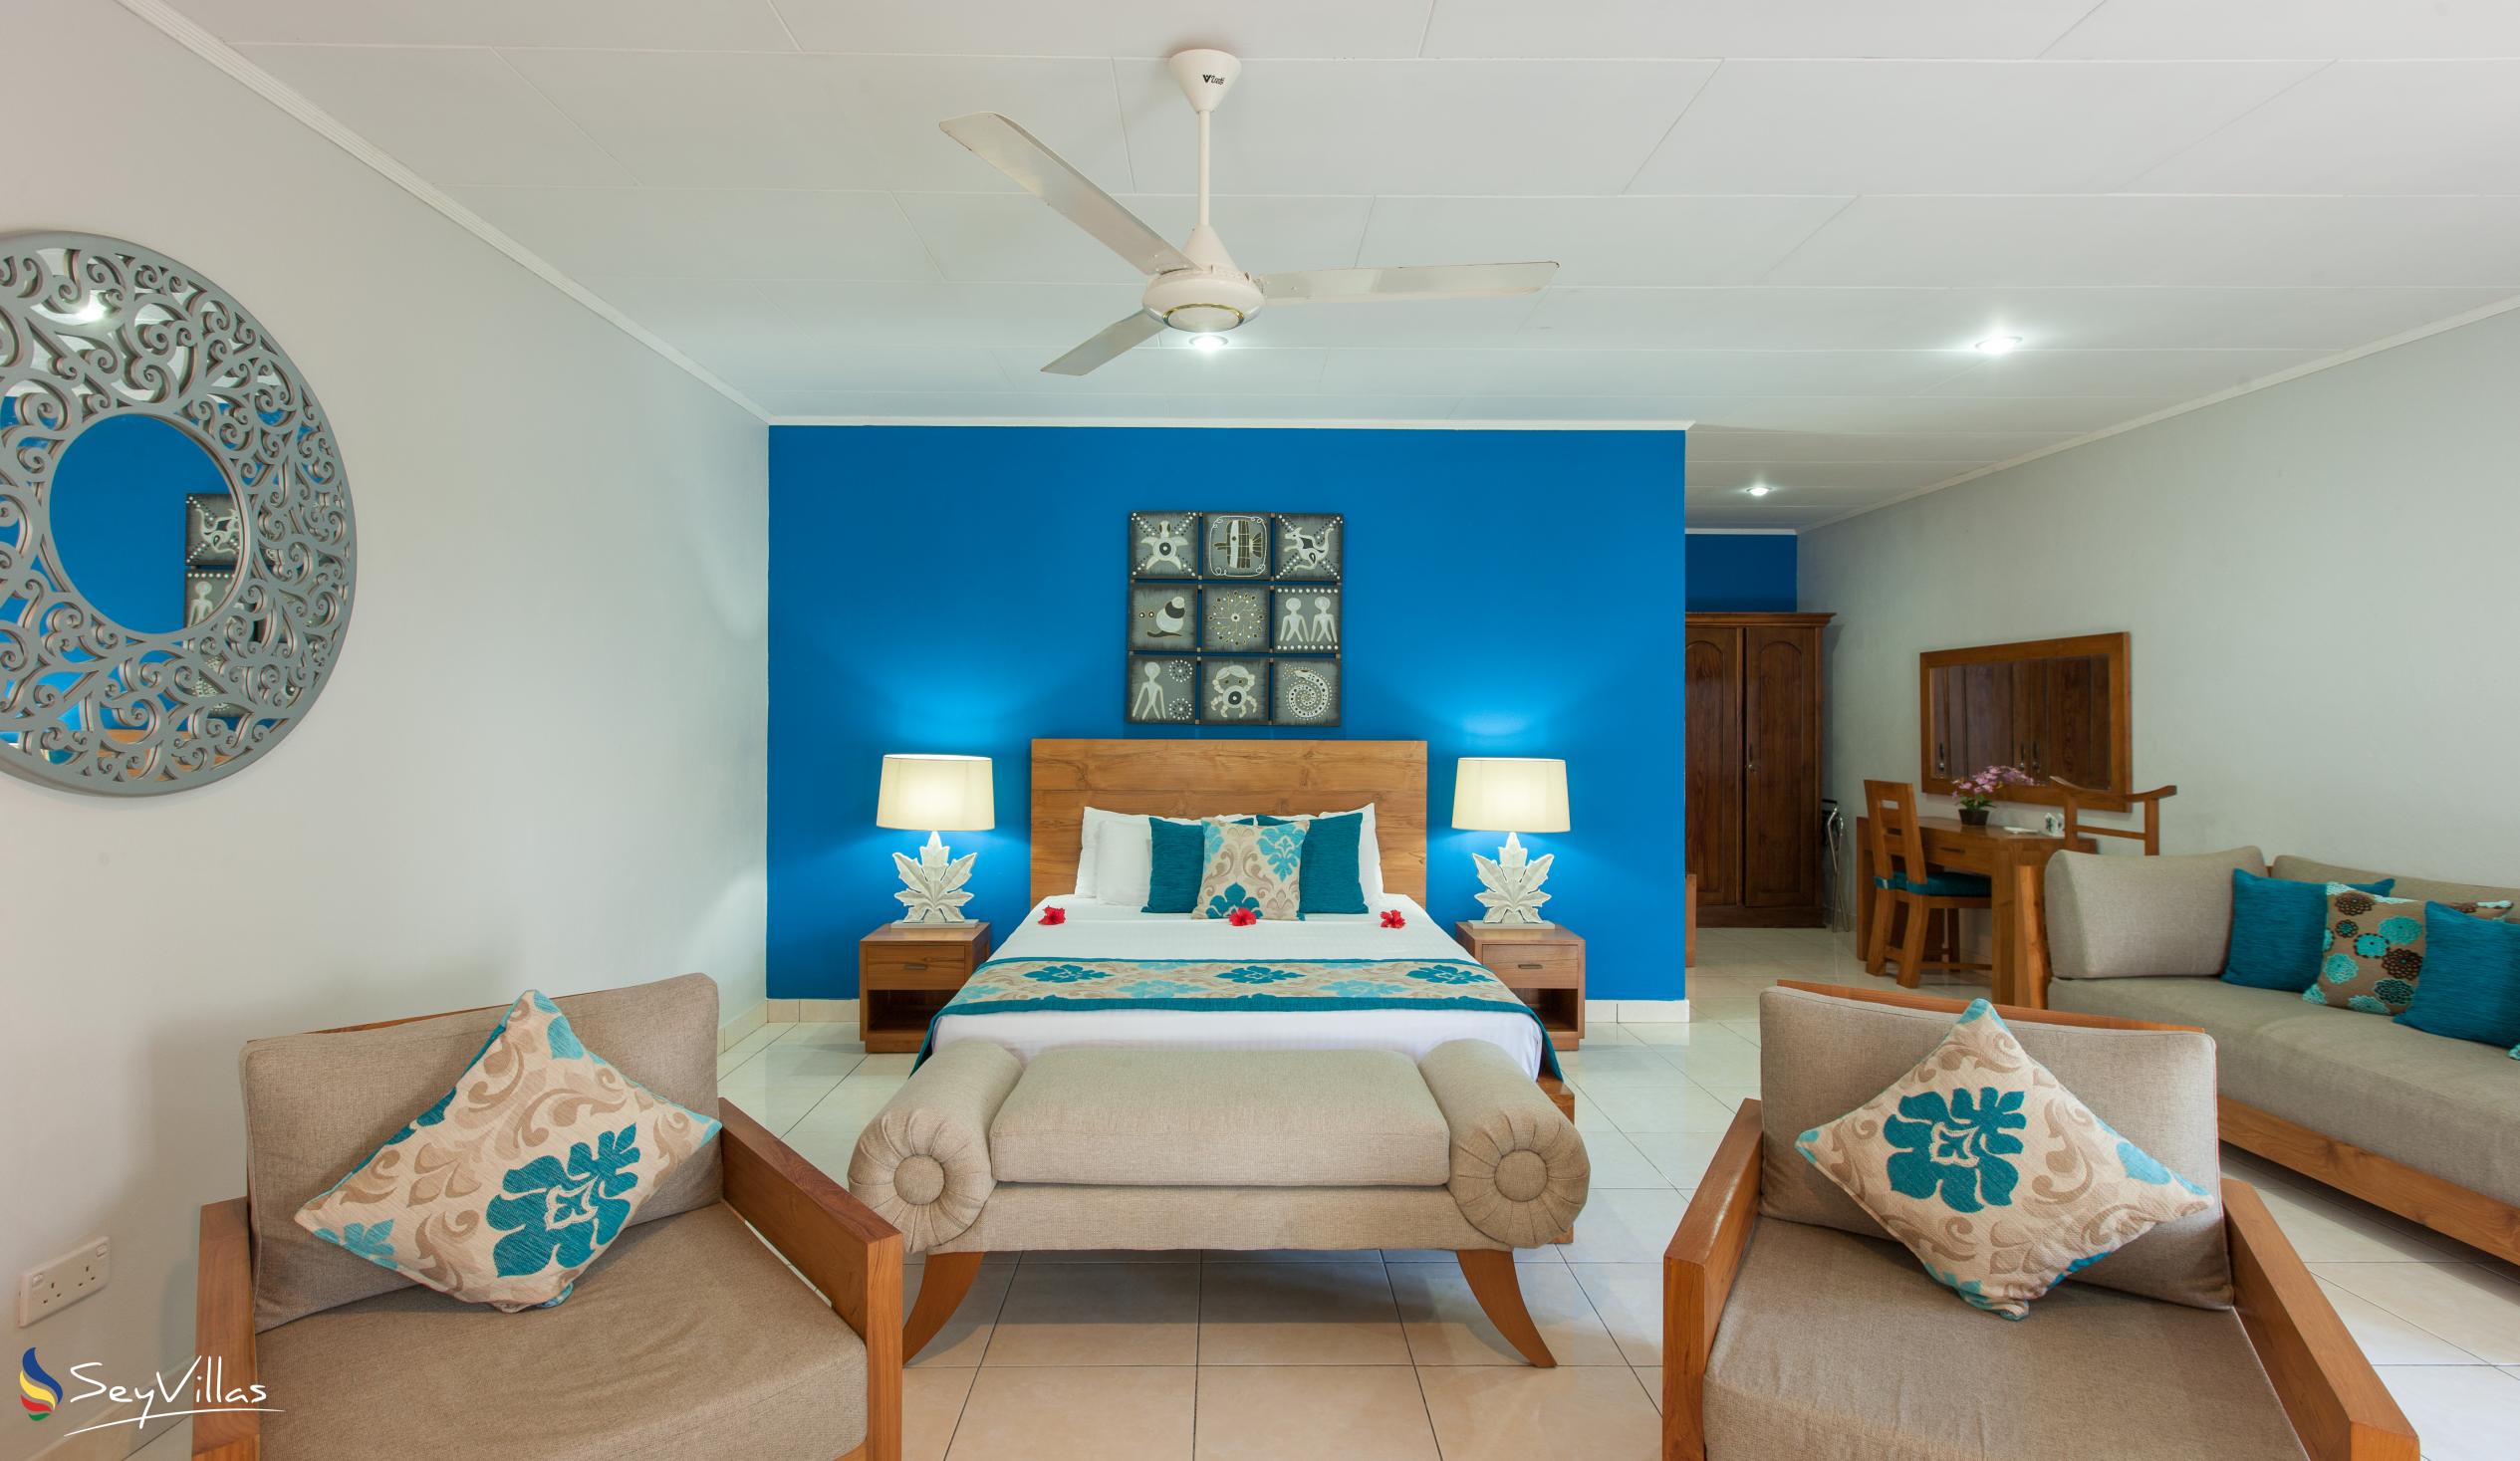 Foto 41: Villas de Mer - Junior Suite - Praslin (Seychellen)